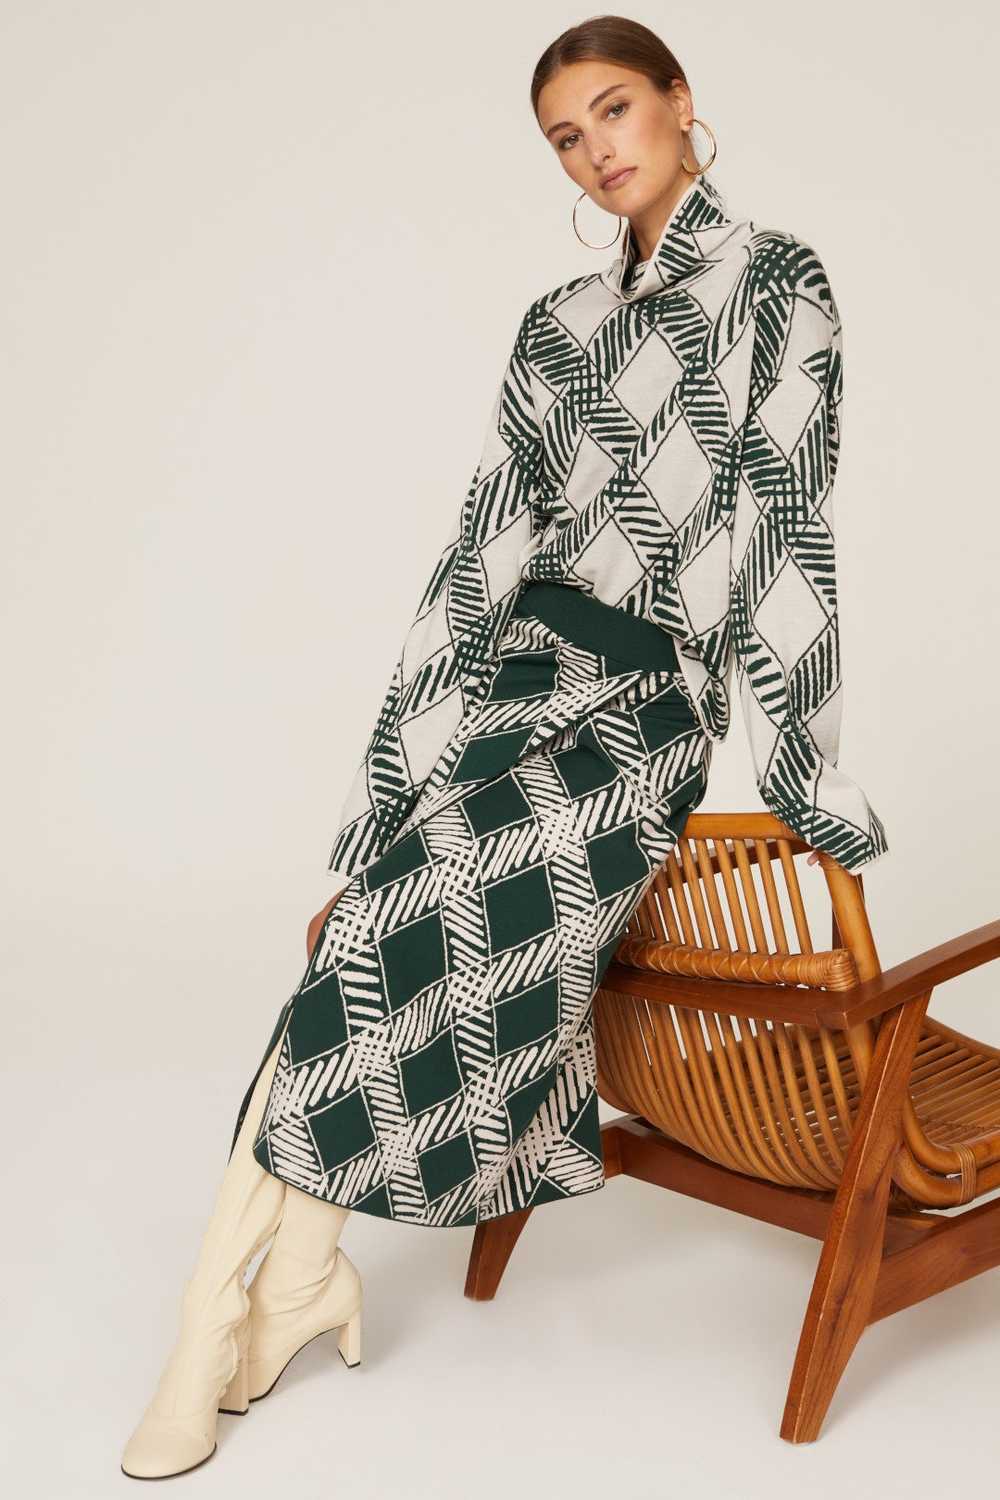 Tanya Taylor Candace Wrap Knit Skirt - image 5